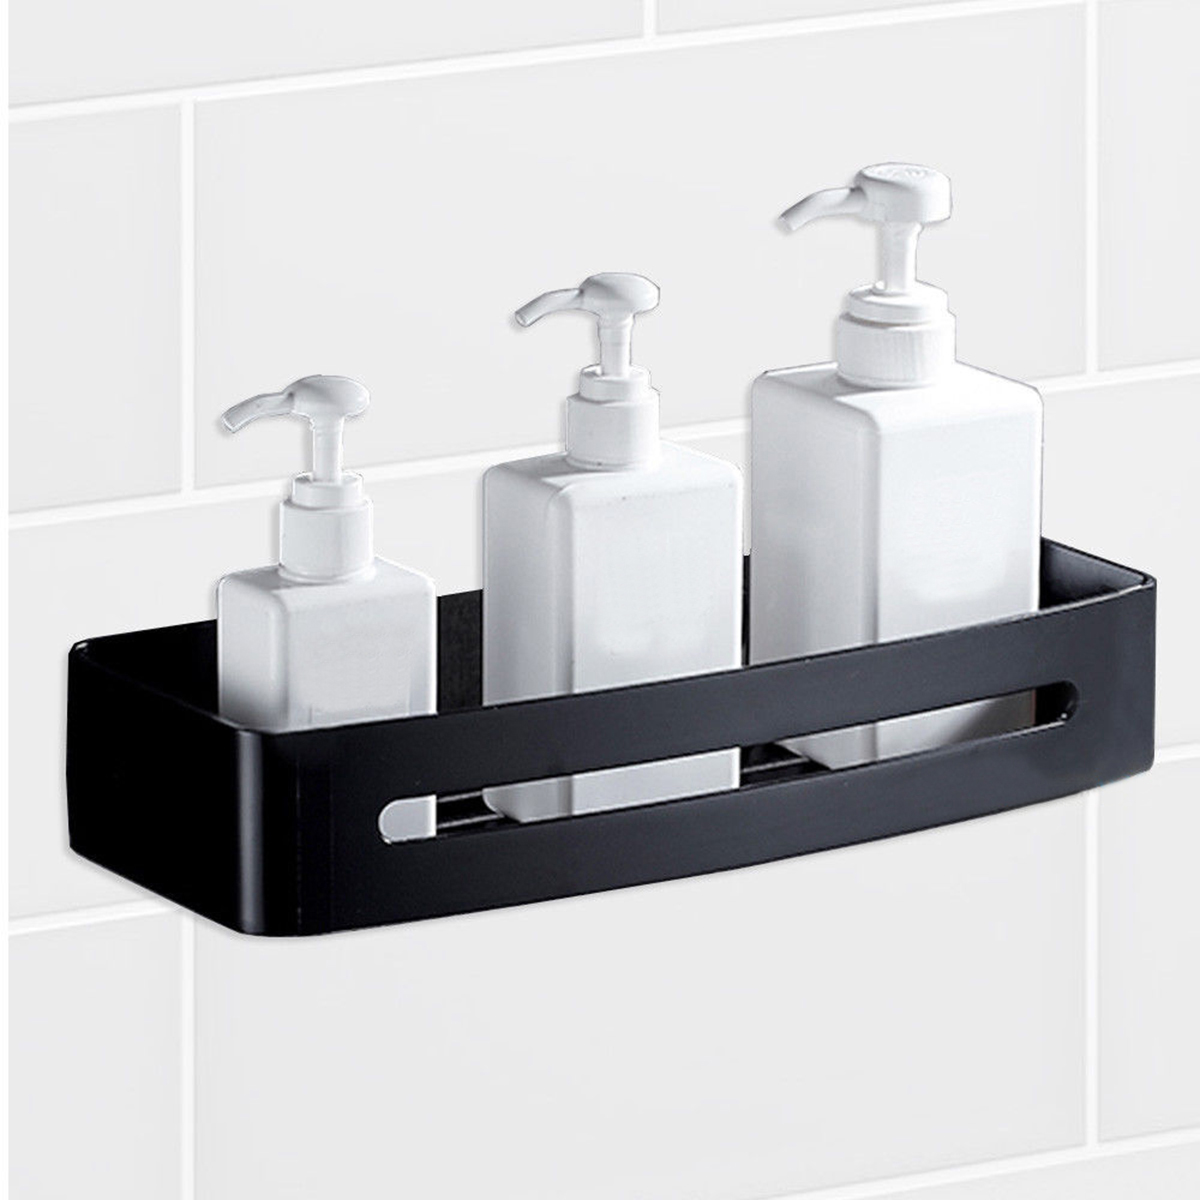 Stainless-Steel-Shower-Caddy-Storage-Kitchen-Rack-Holder-Wall-Mount-Rectangle-Bathroom-Drain-Shelf-1403167-1